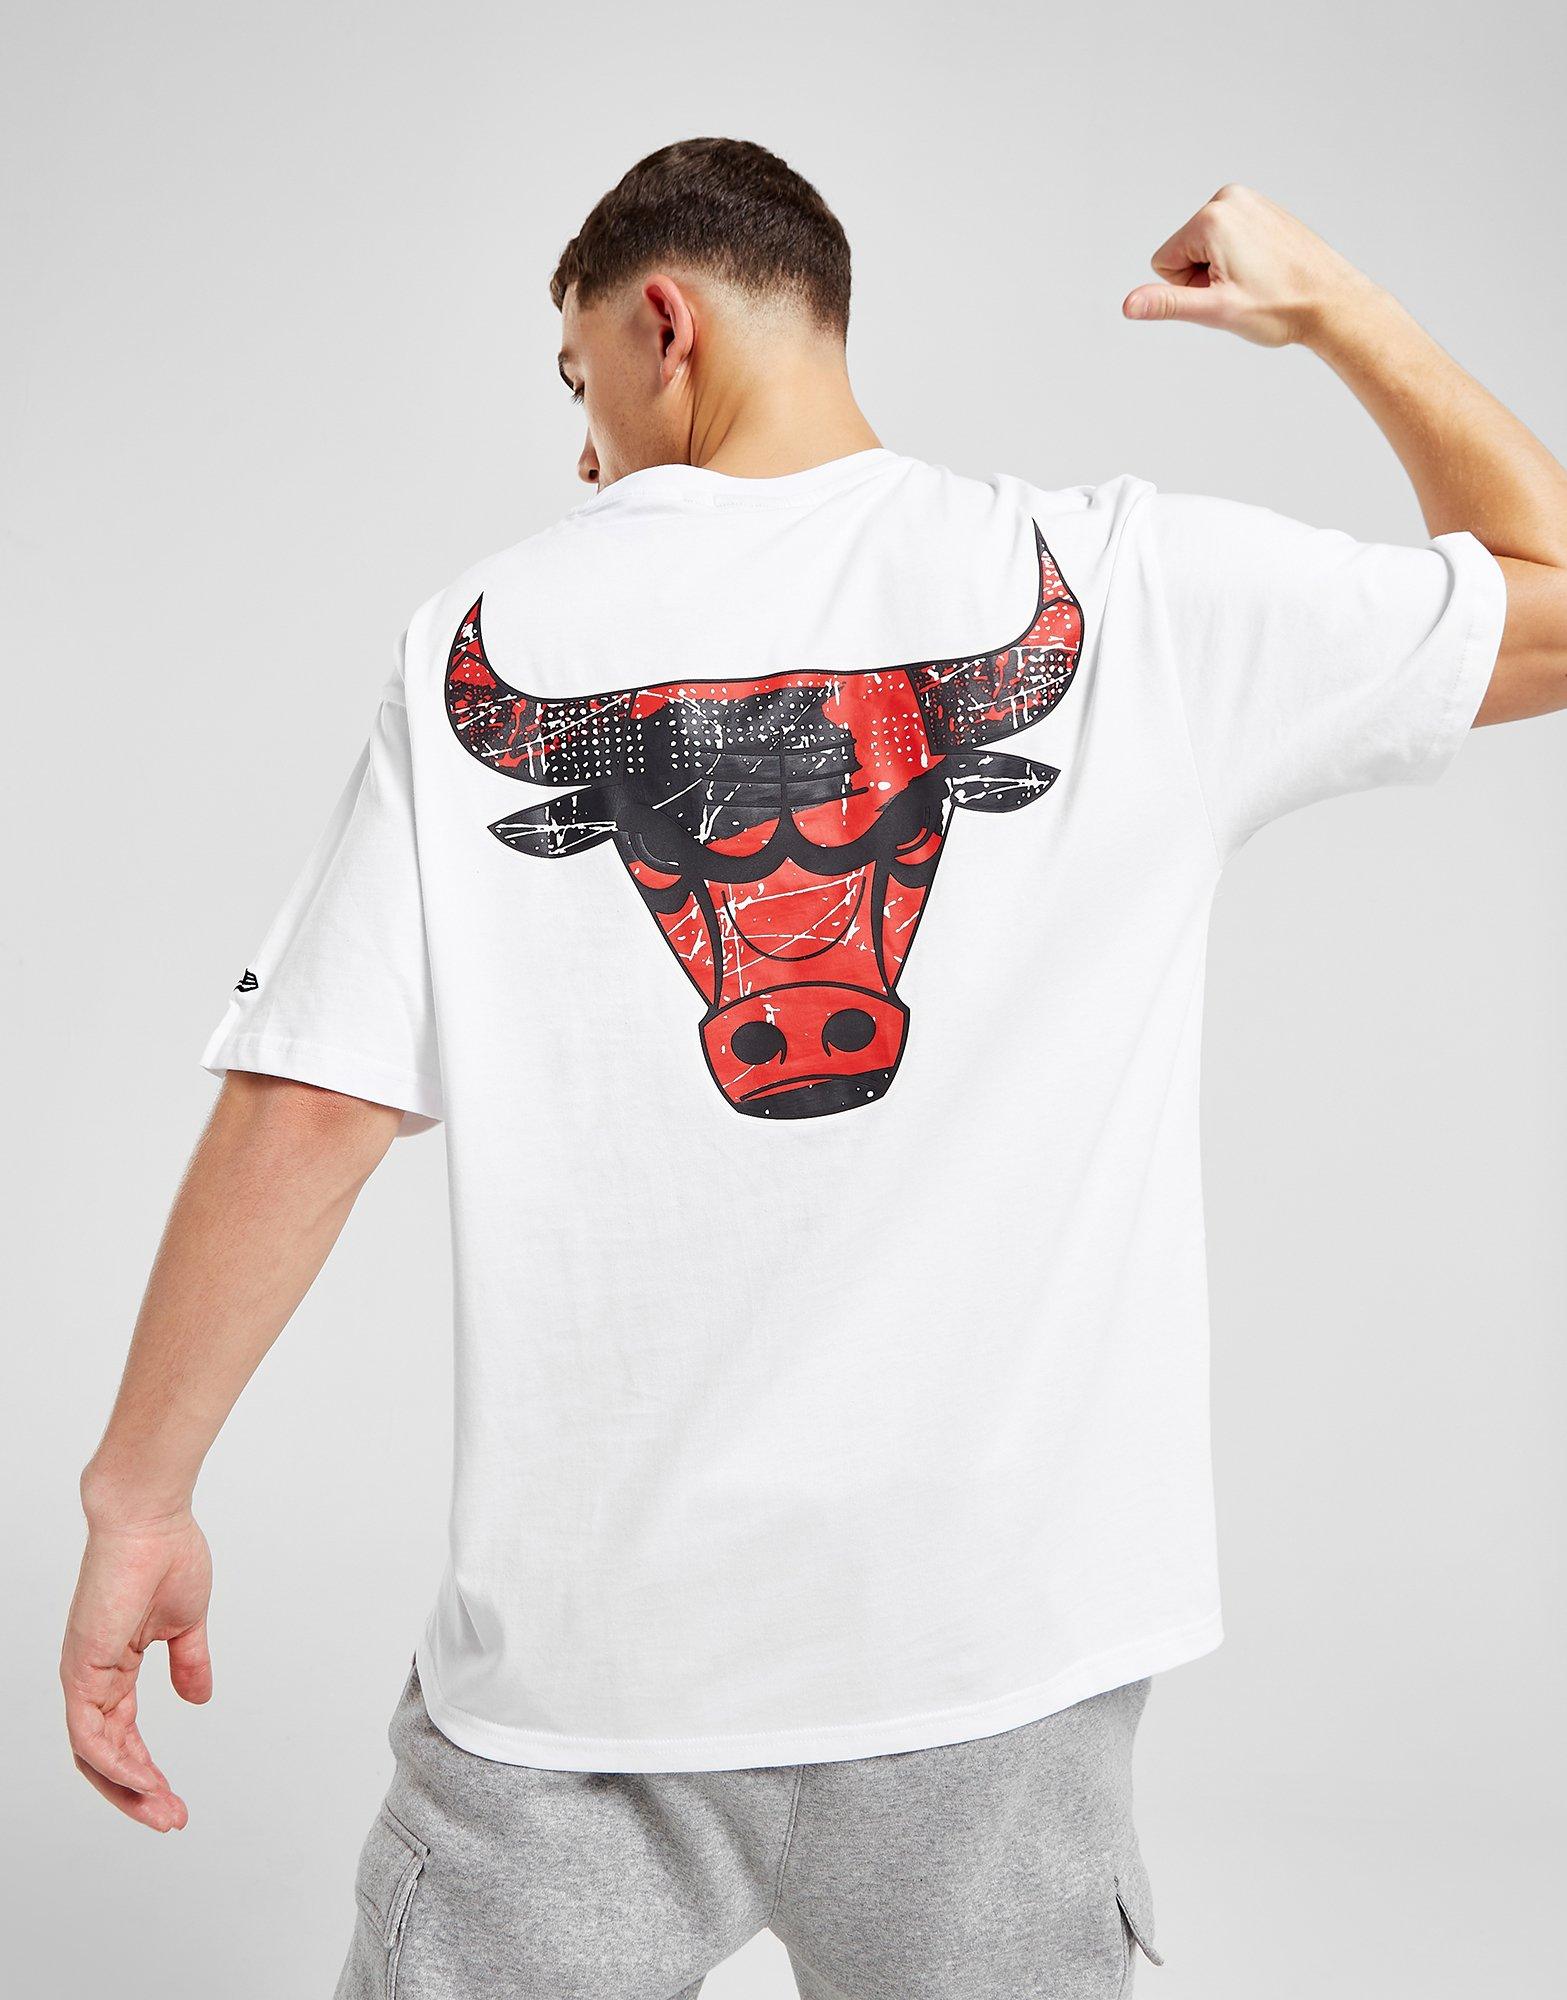 New Era NBA Chicago Bulls oversized mesh t-shirt in white with logo print